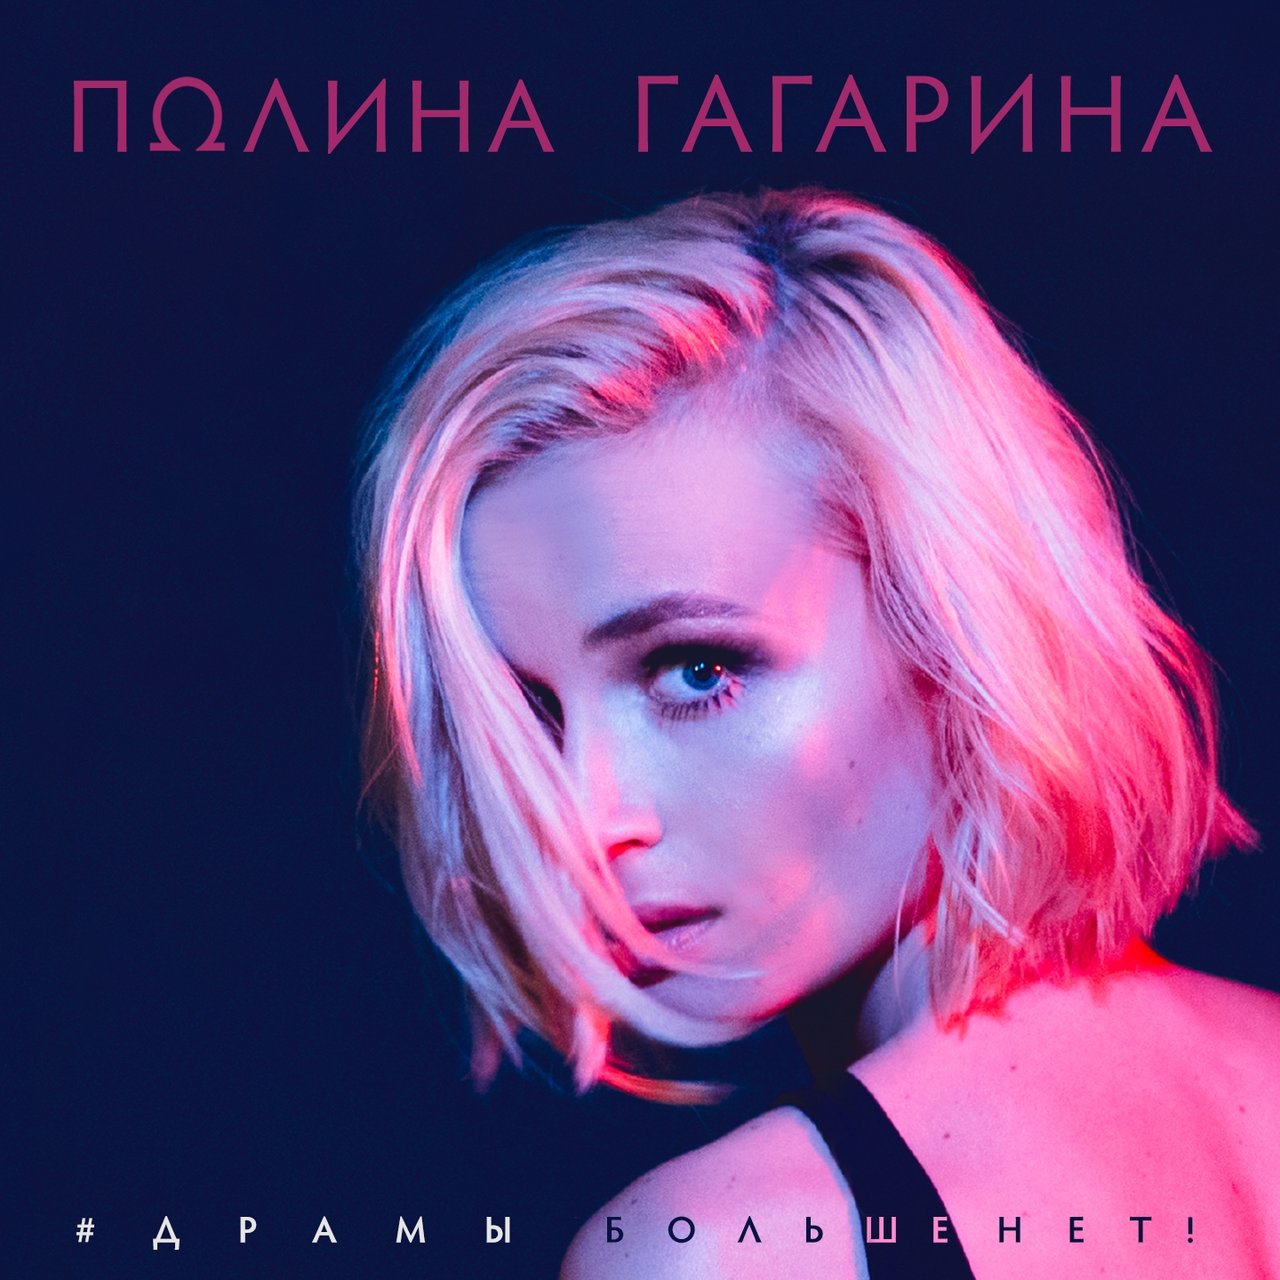 Polina Gagarina — Dramy bolshe net cover artwork